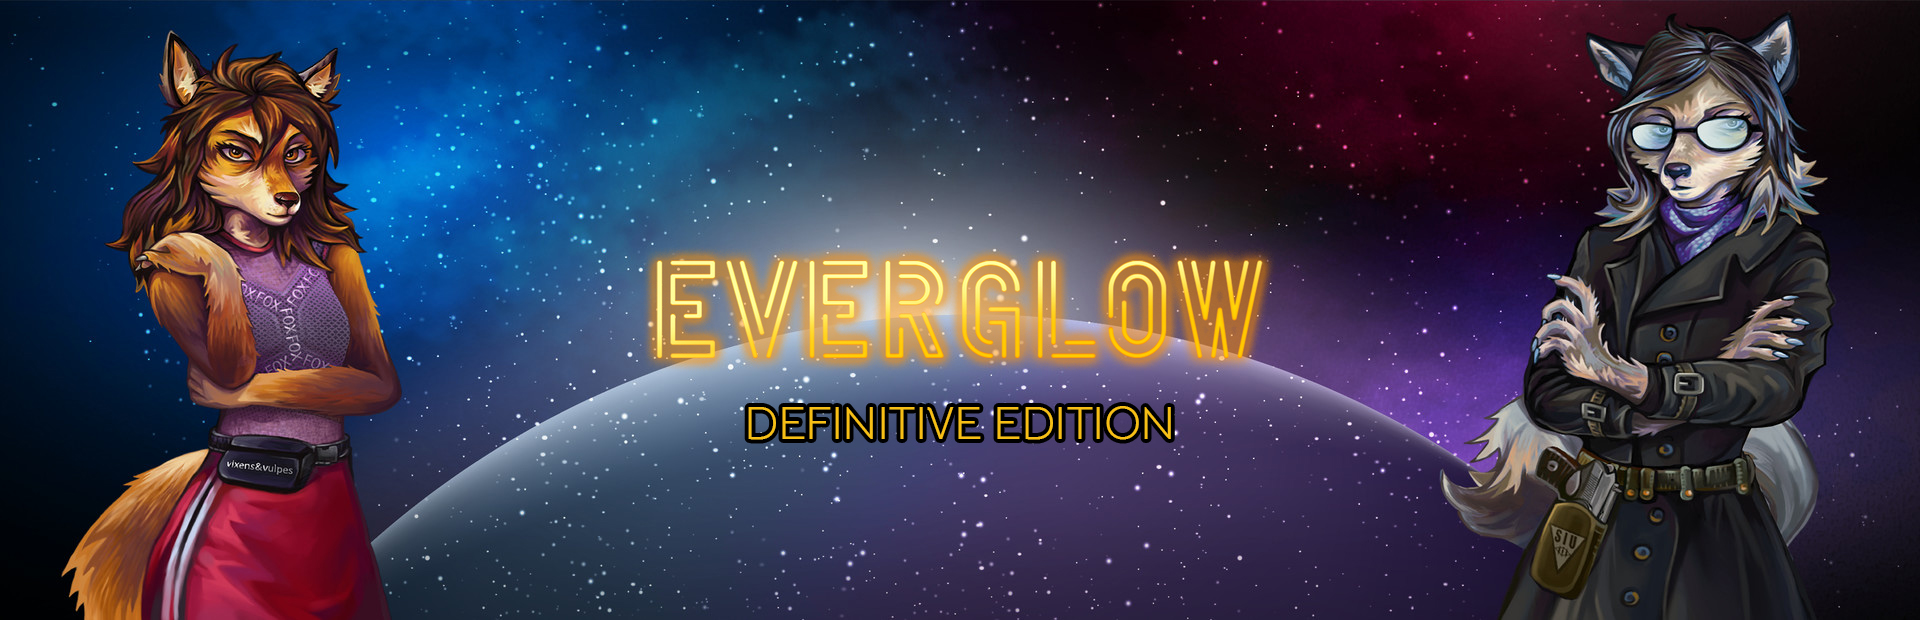 Everglow v1.3 "Definitive edition"